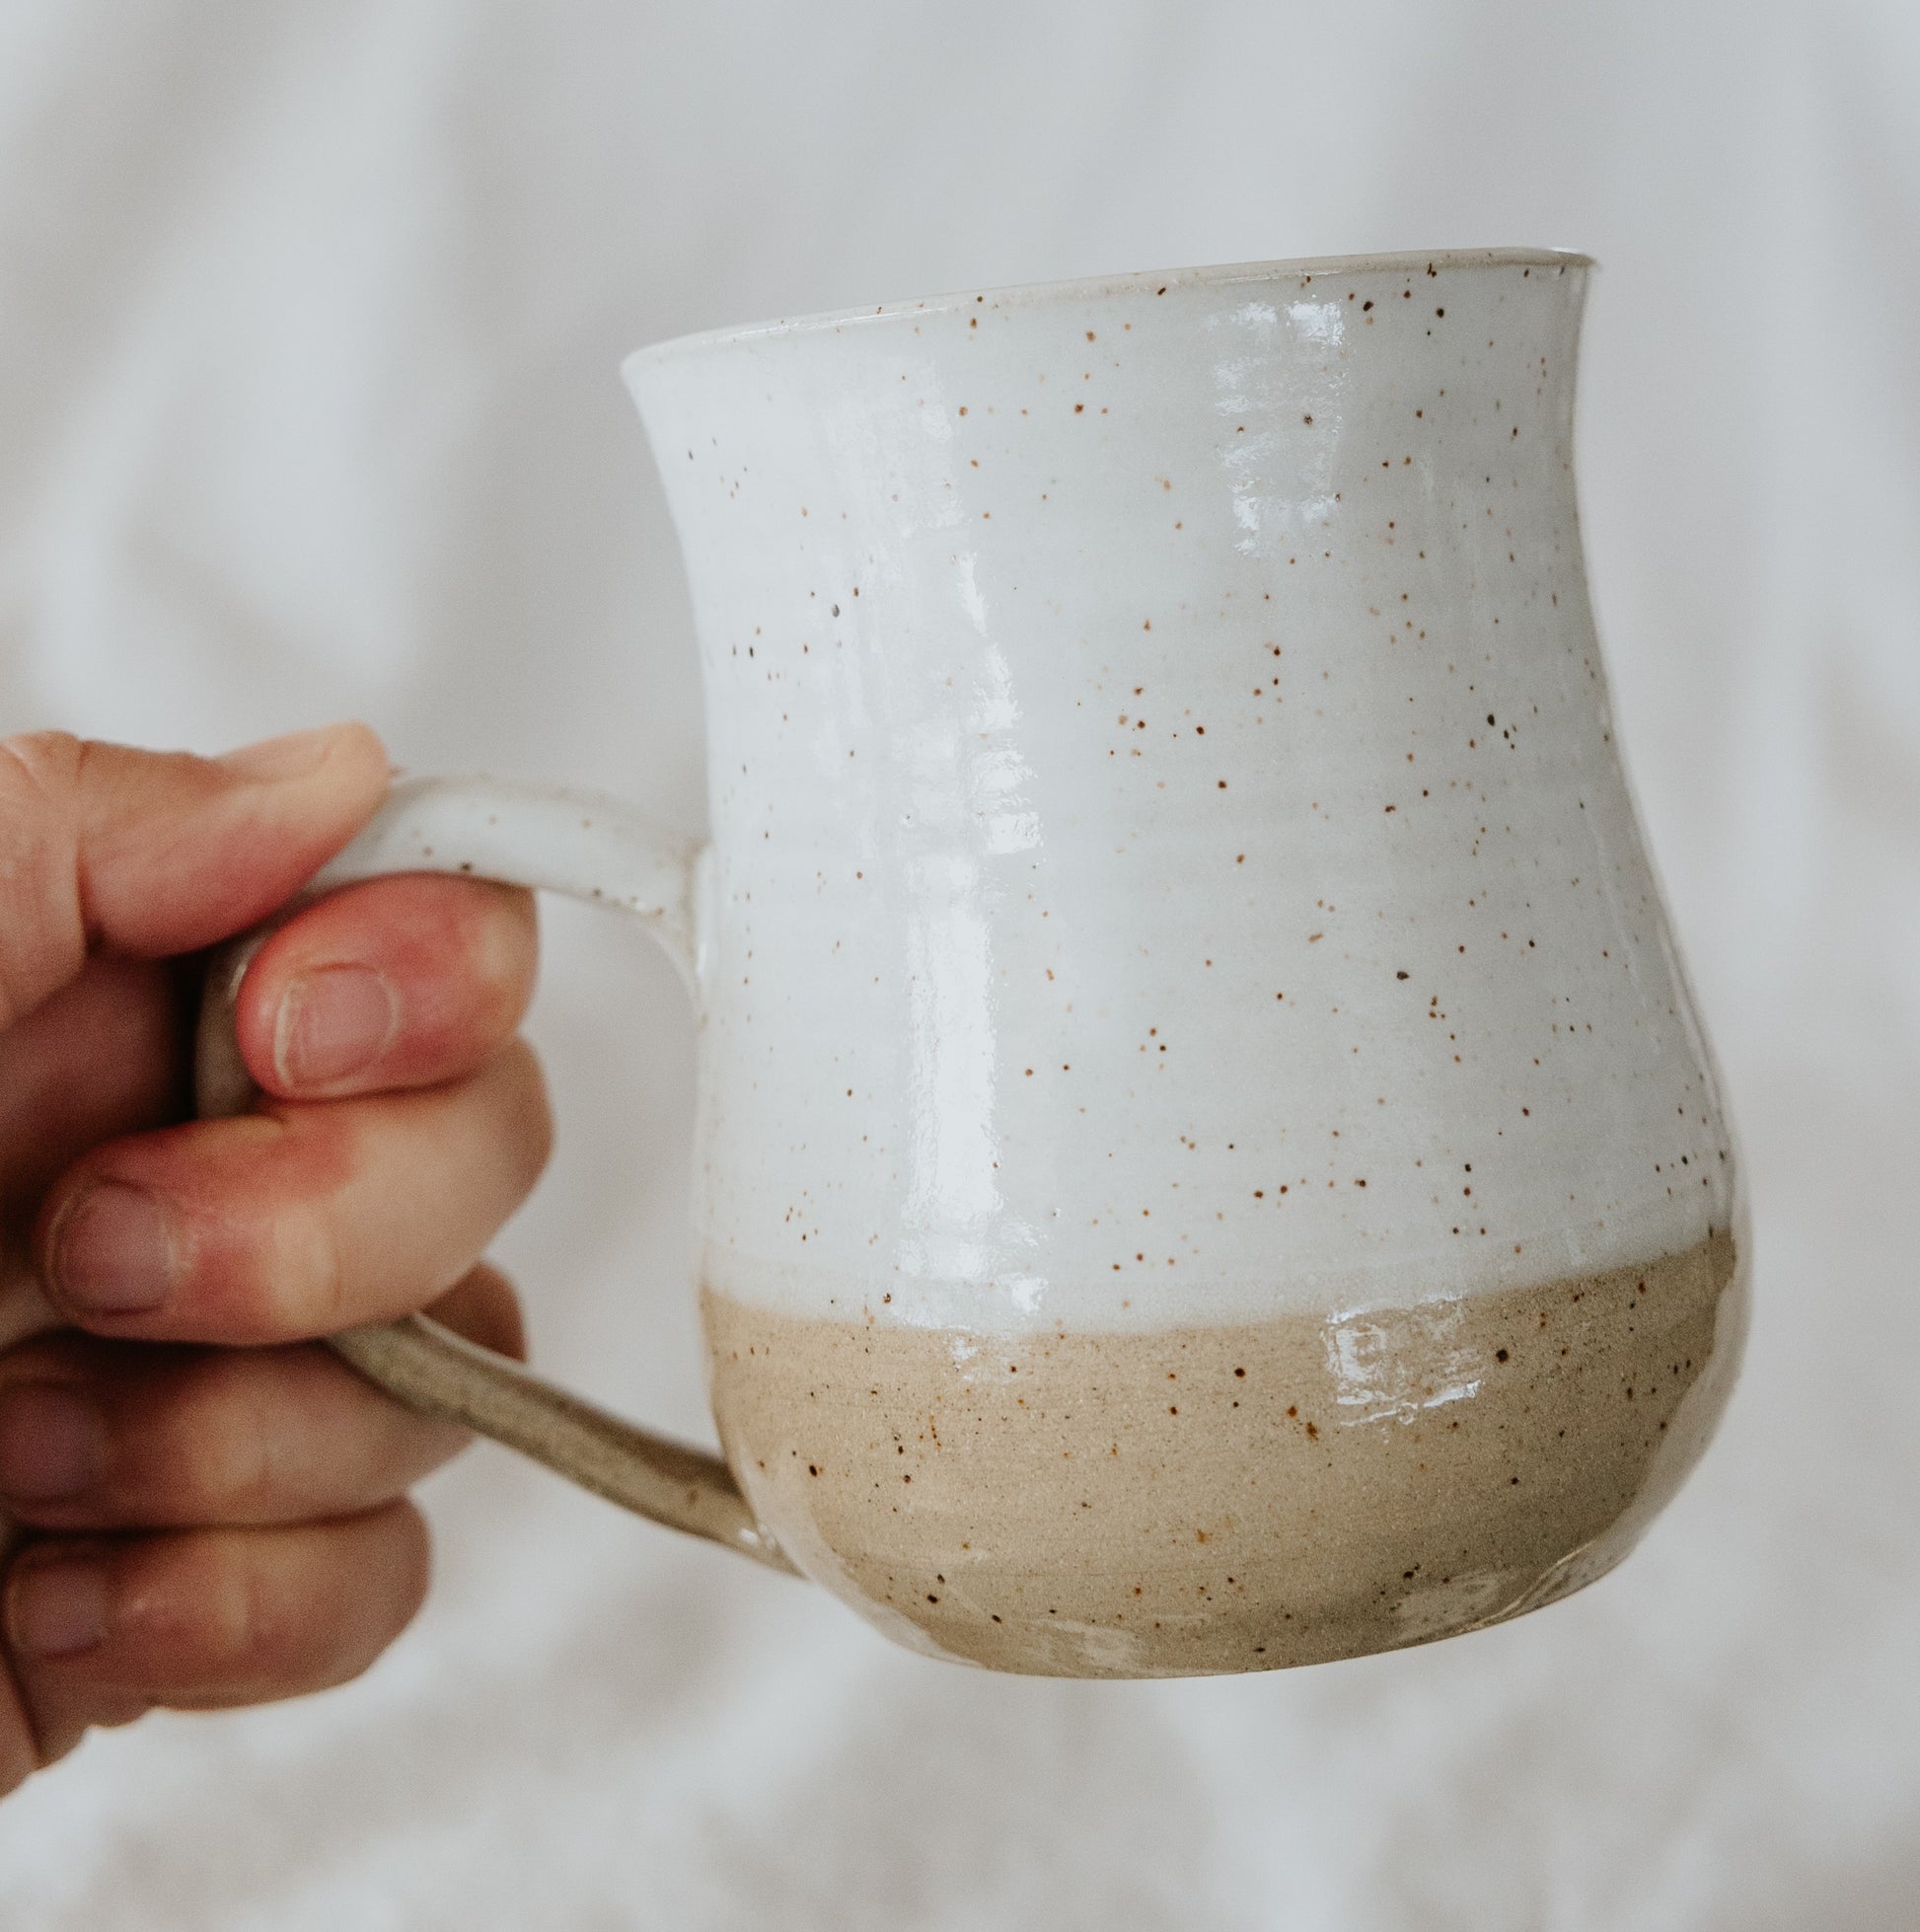 12oz White Speckled Ceramic Coffee Mug With Natural Baked Bottom |  Dishwasher + Microwave Safe